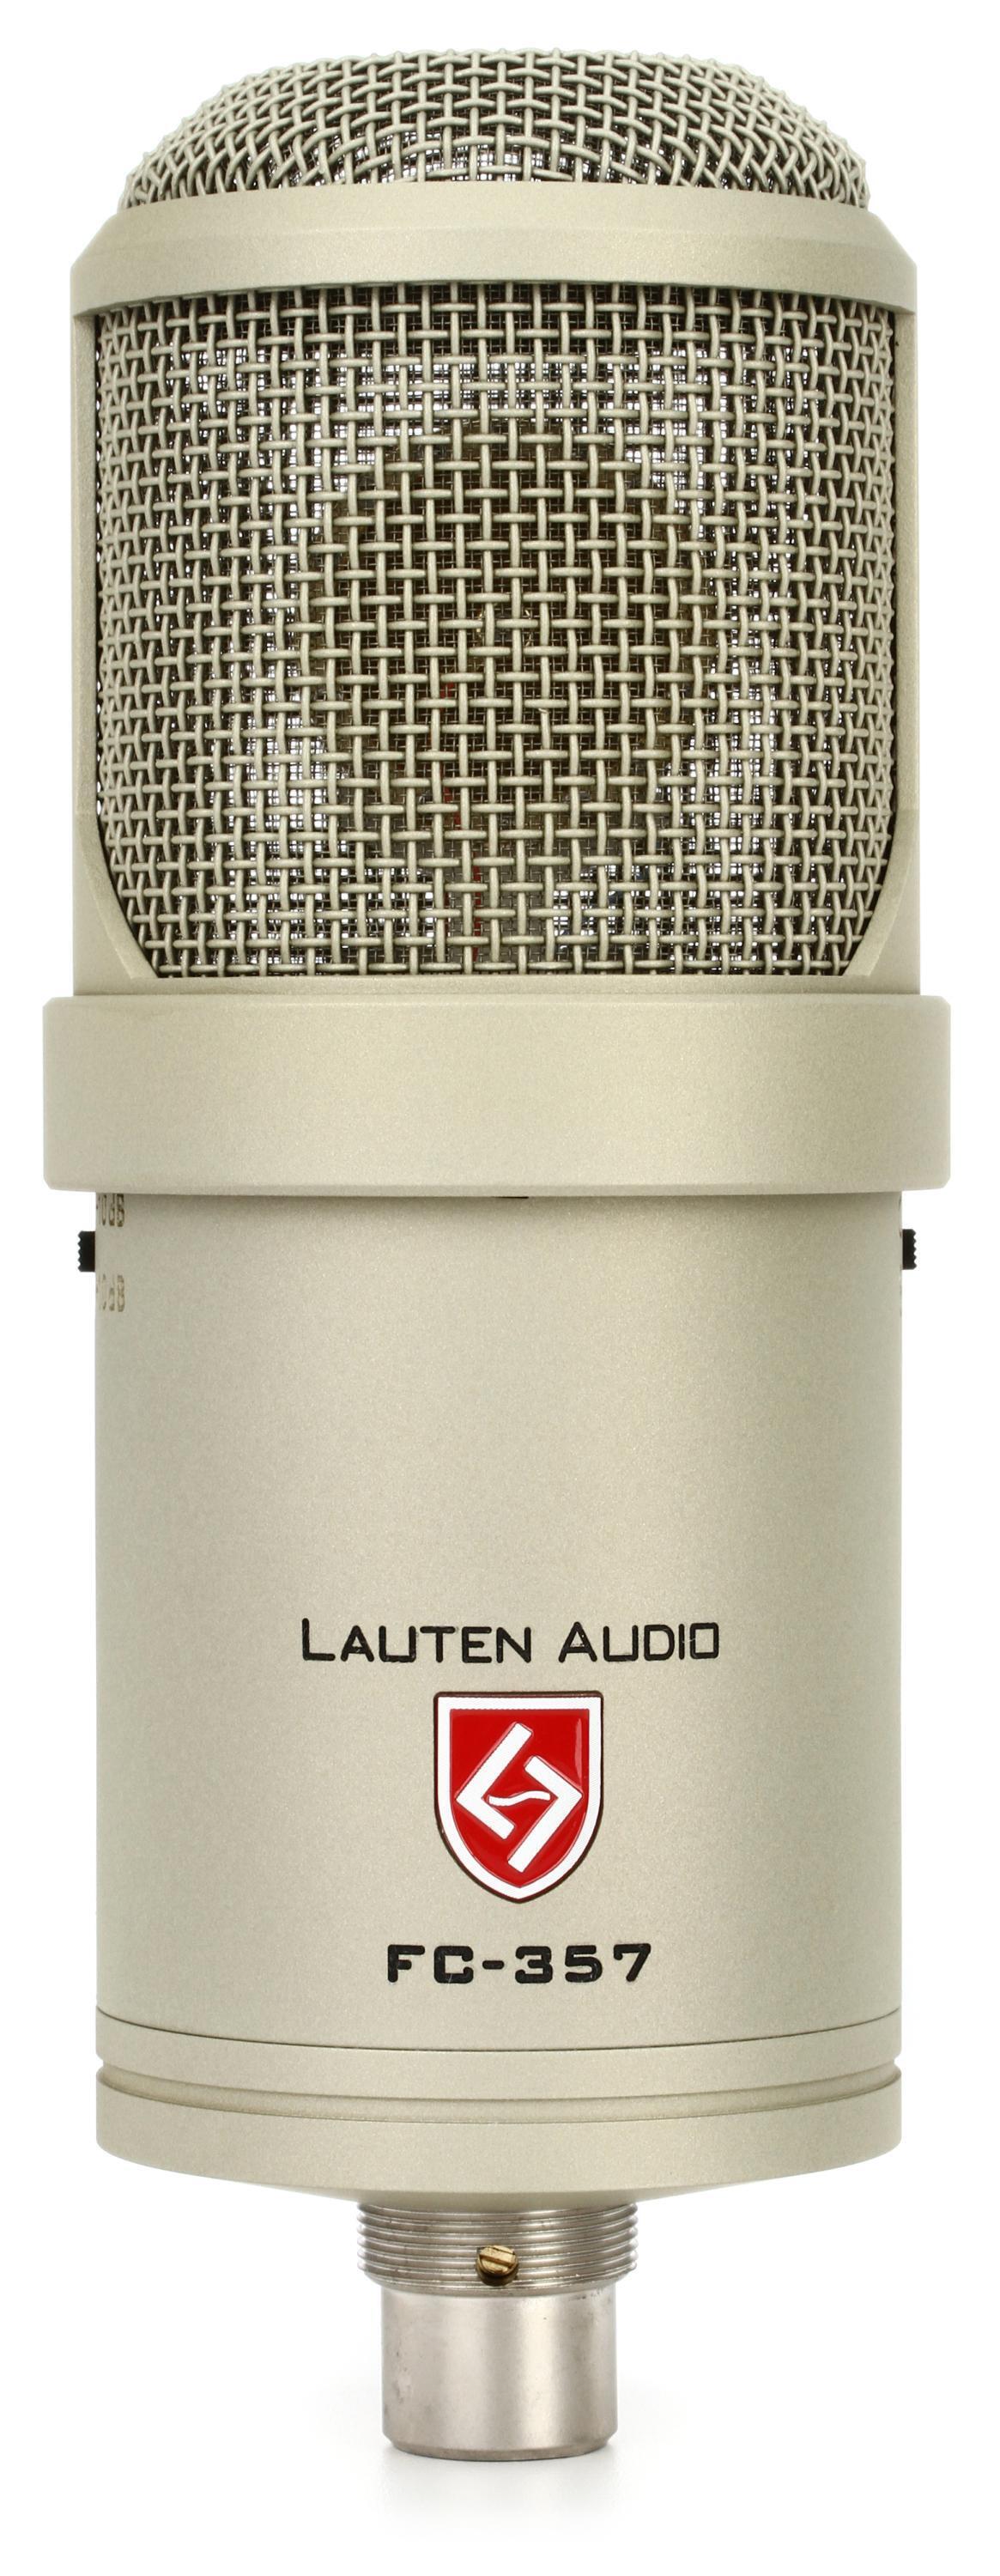 【4連休最終特価!】Lauten Audio FC-357 Clarion